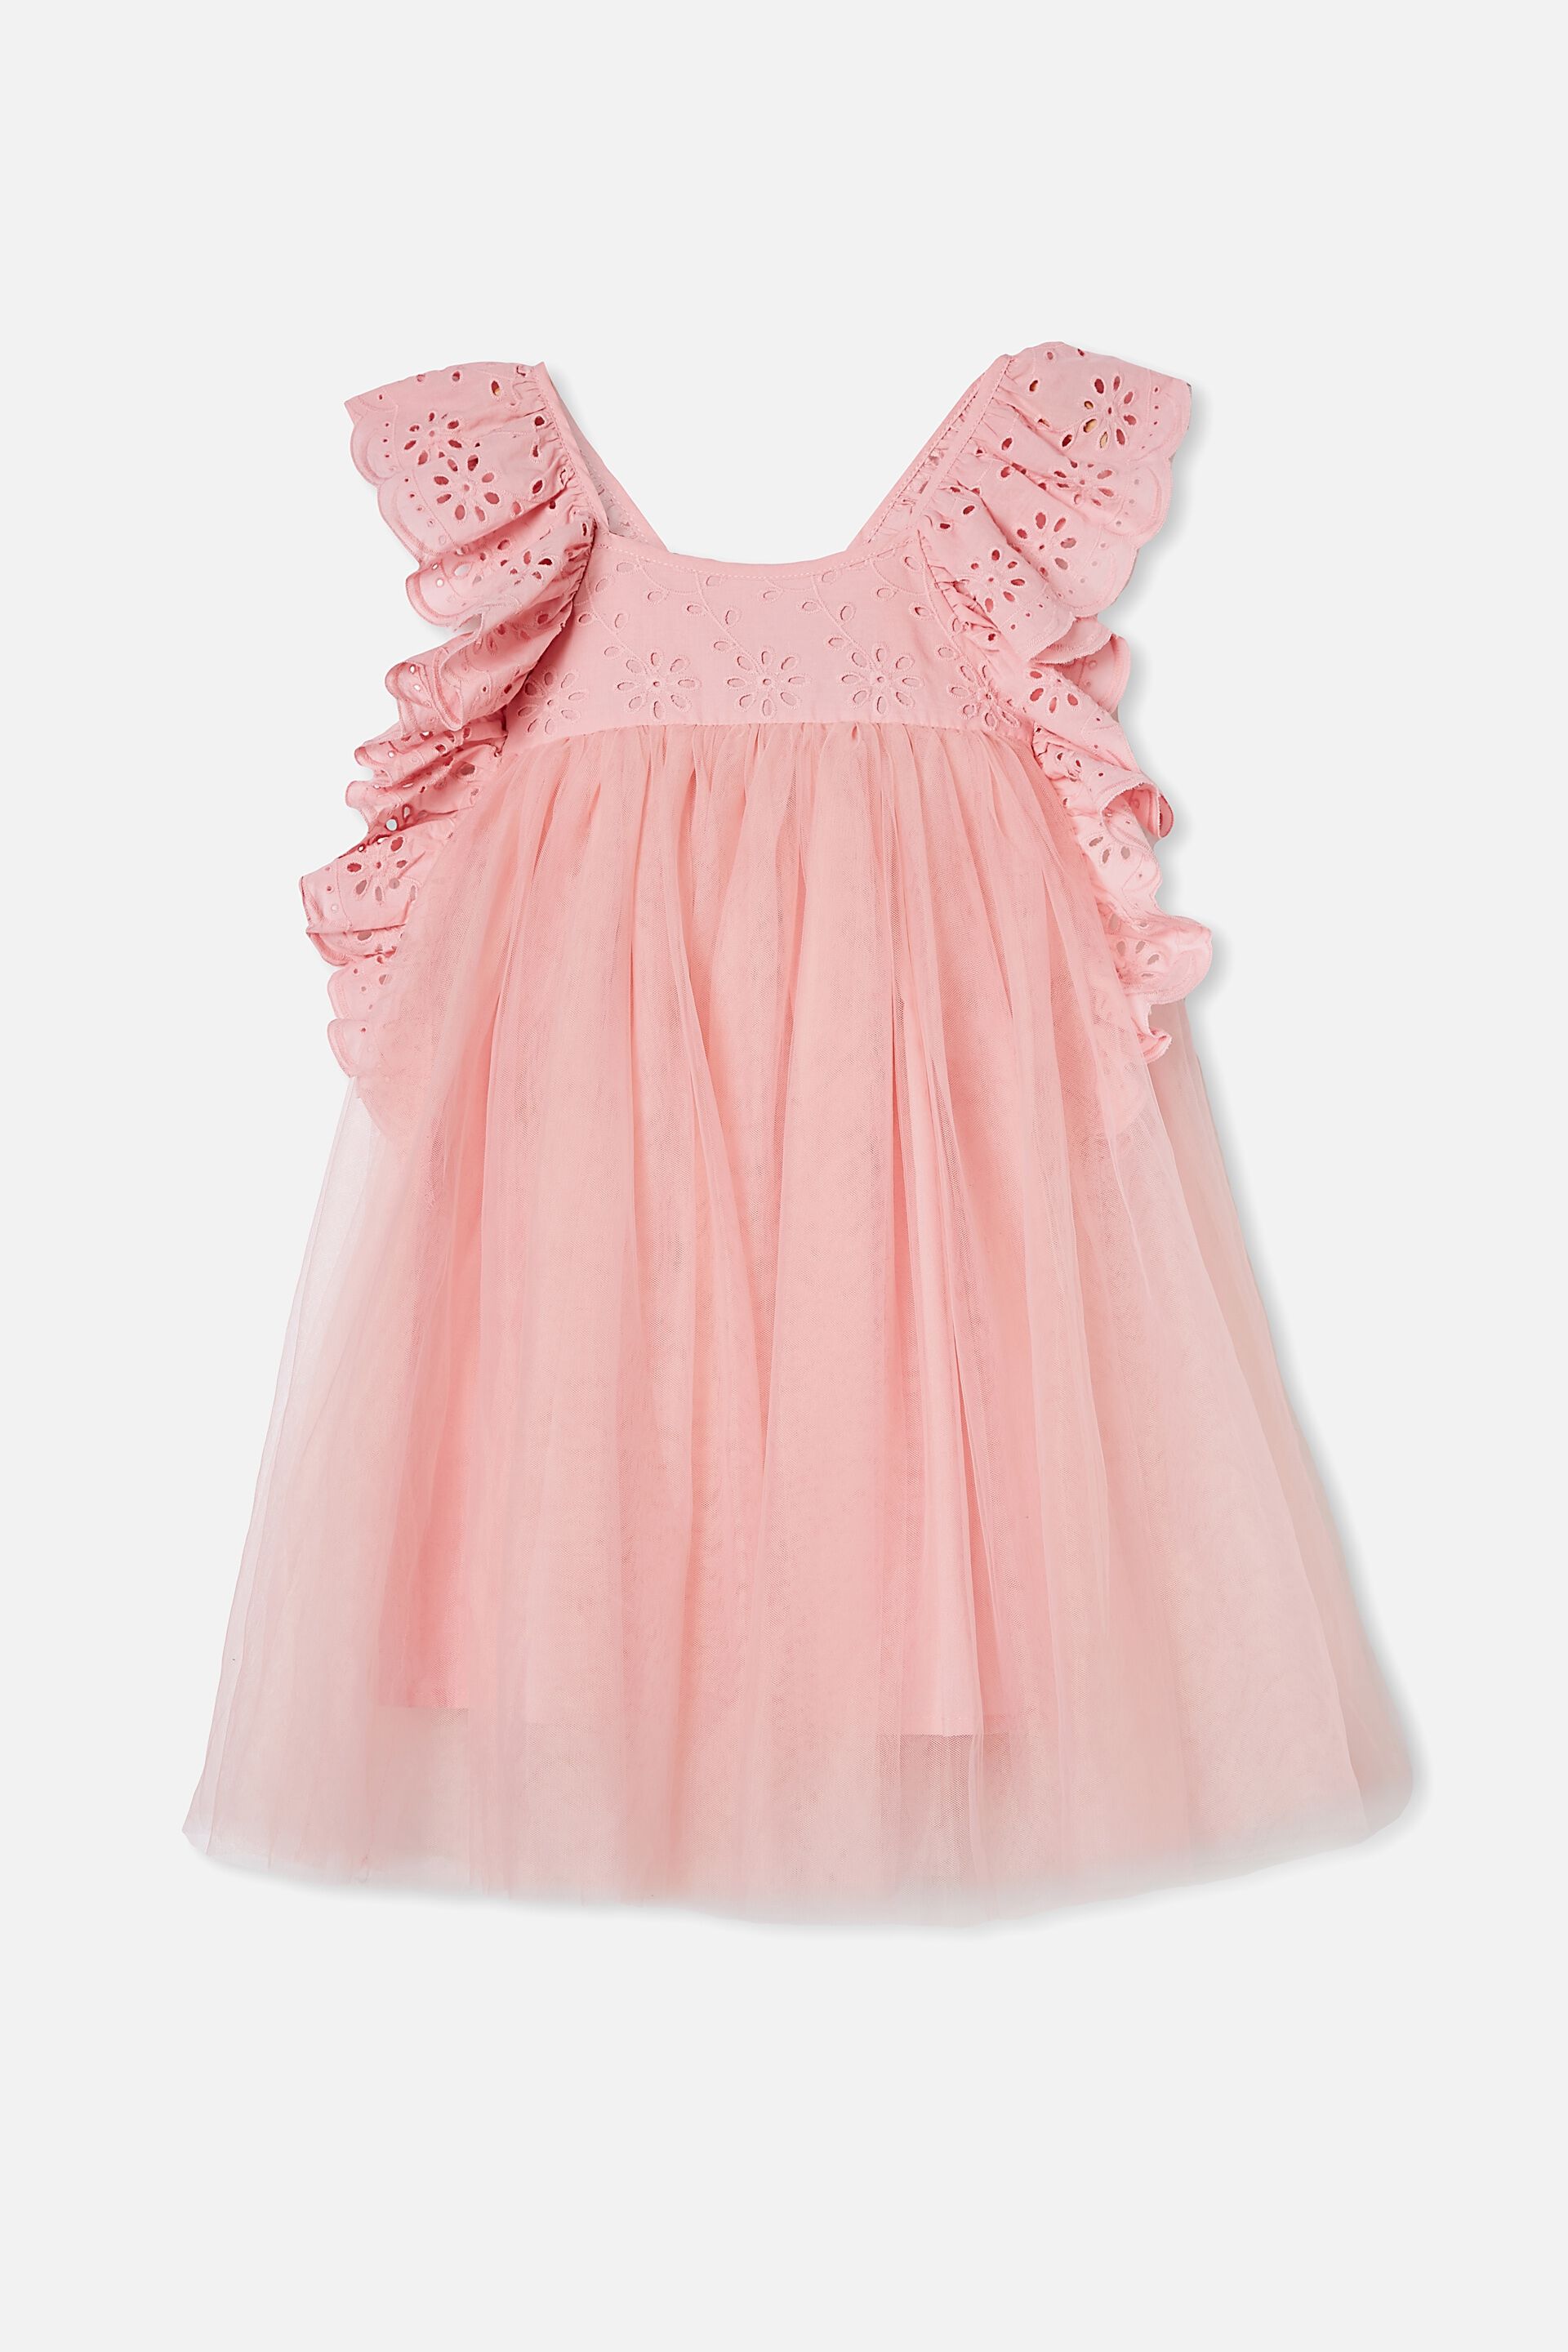 cotton on baby dress